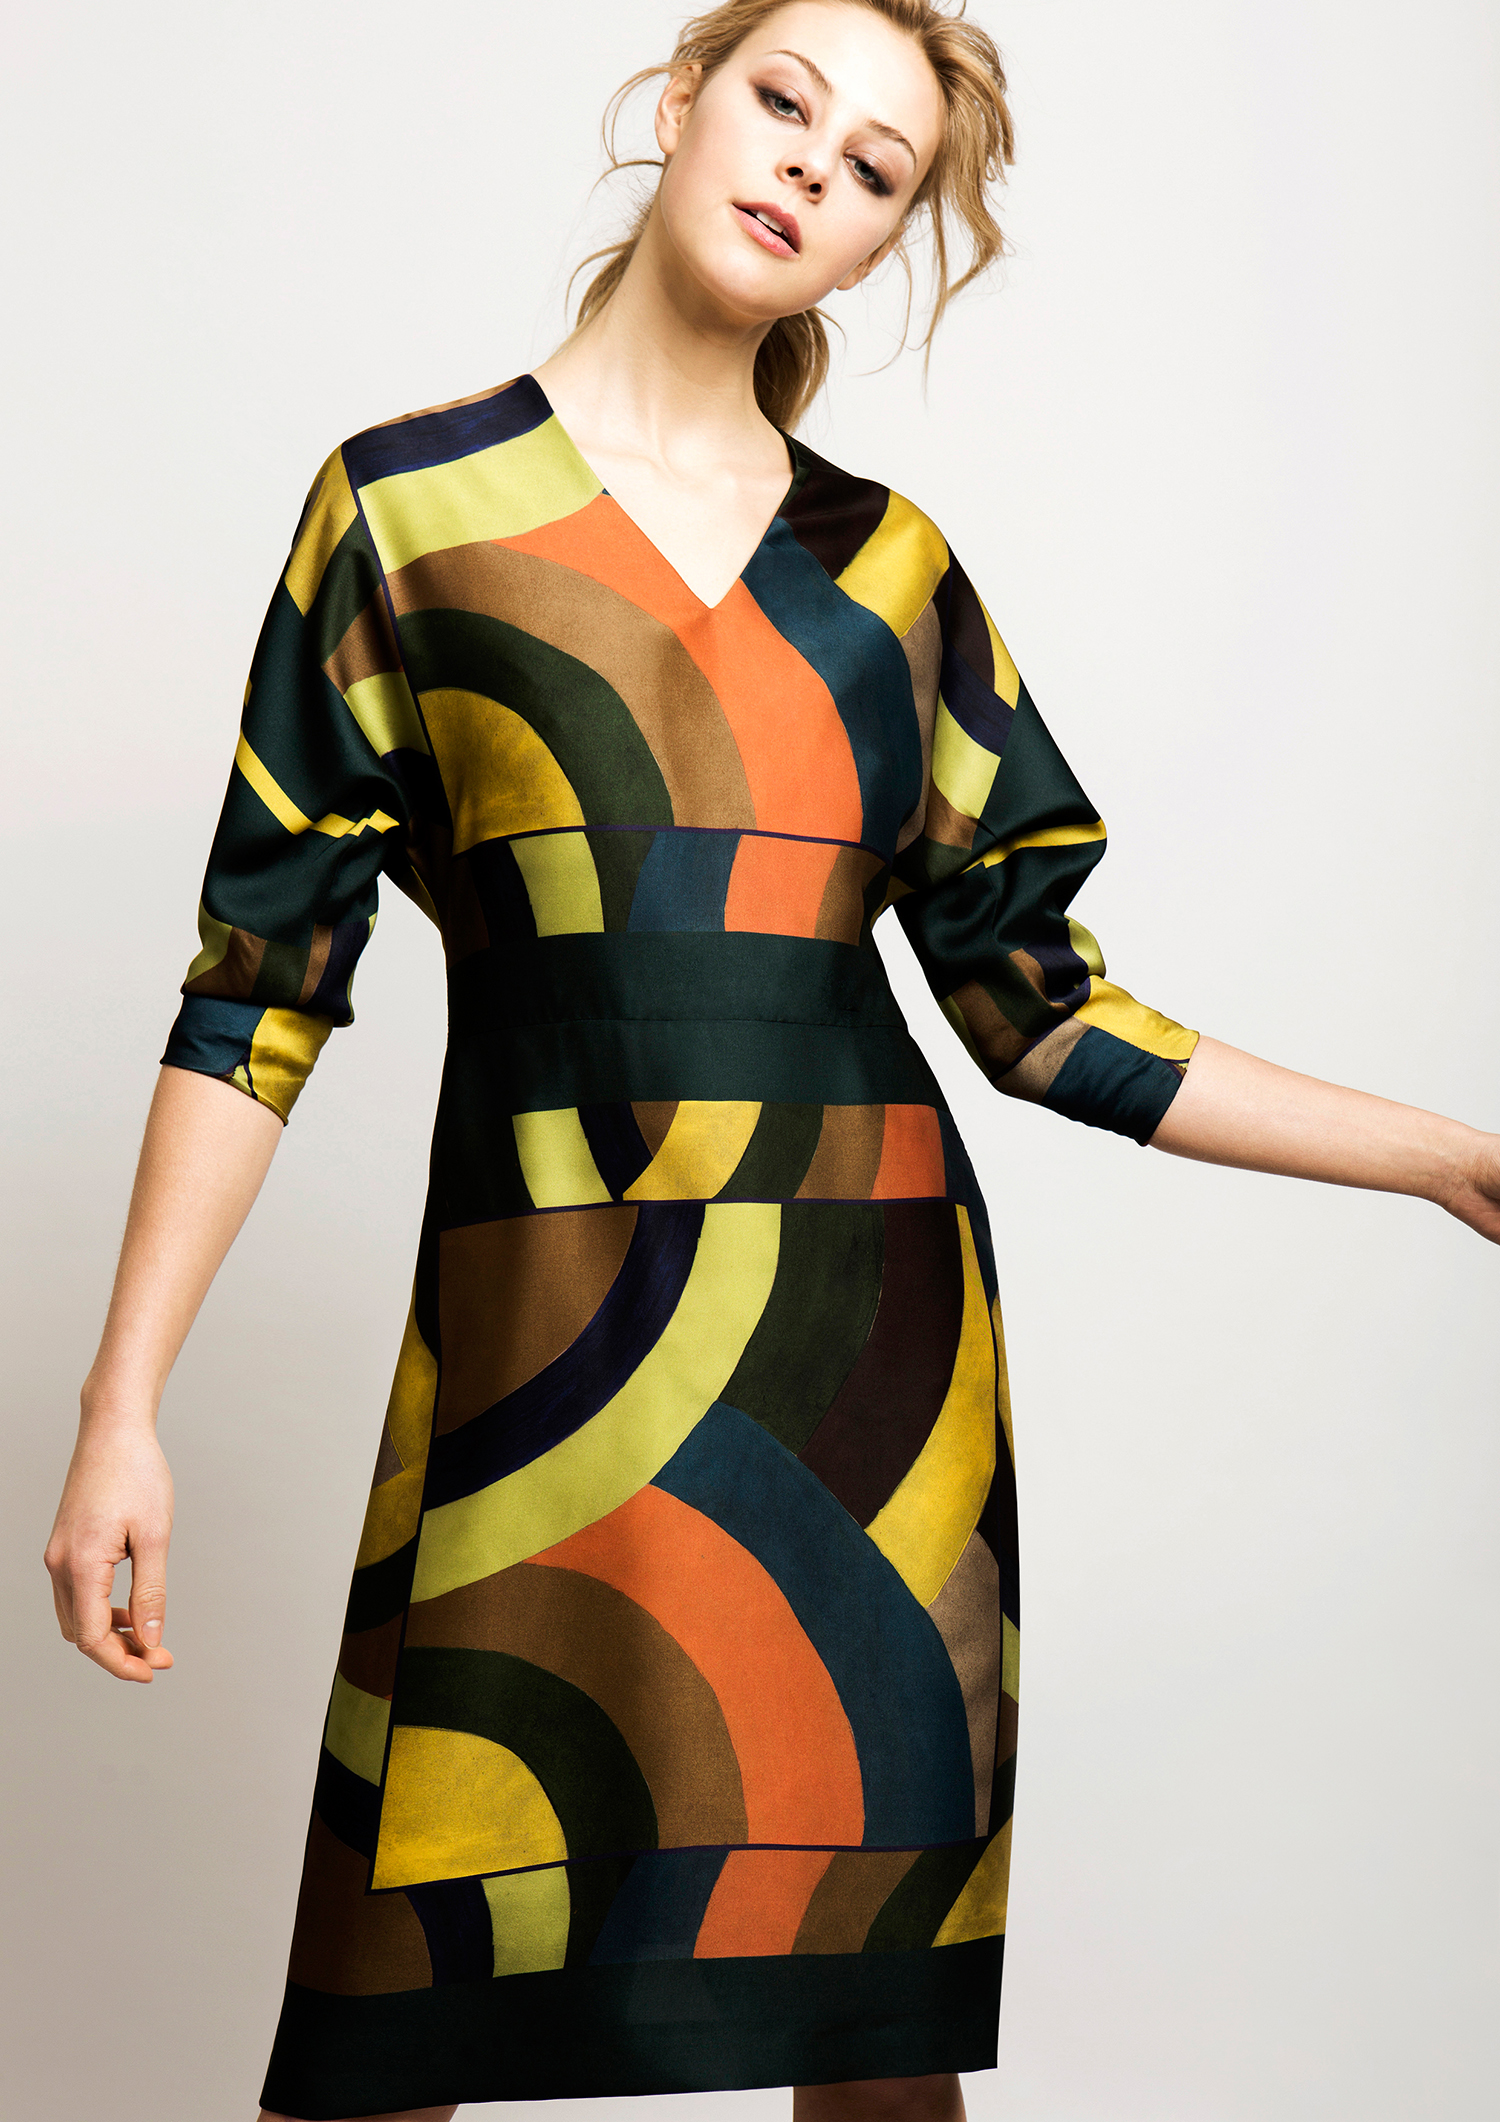 Multicoloured dress.